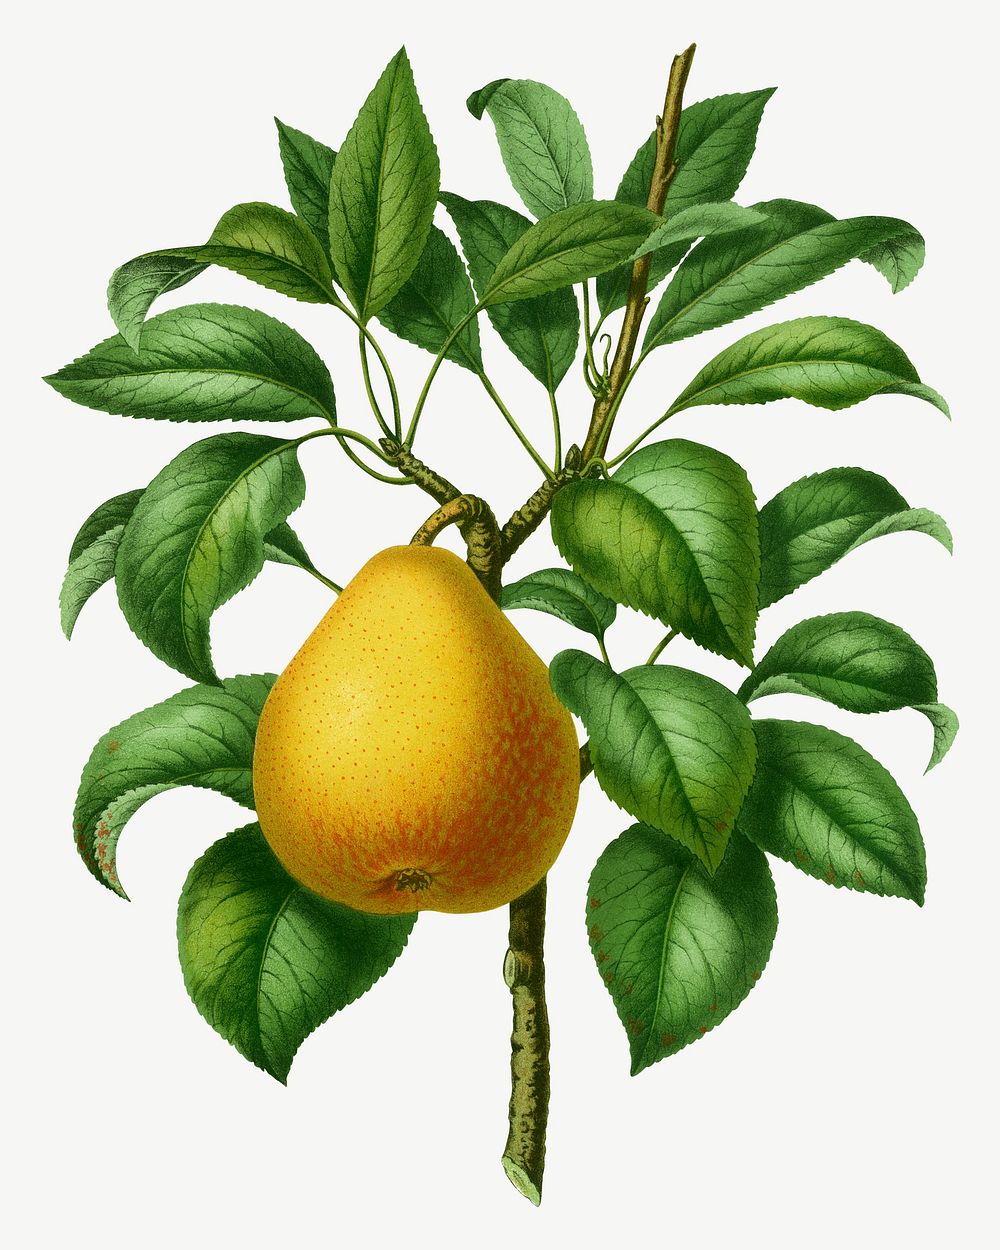 Vintage pear illustration, collage element psd. Remixed from our own original 1879 edition of Nederlandsche Flora en Pomona. 